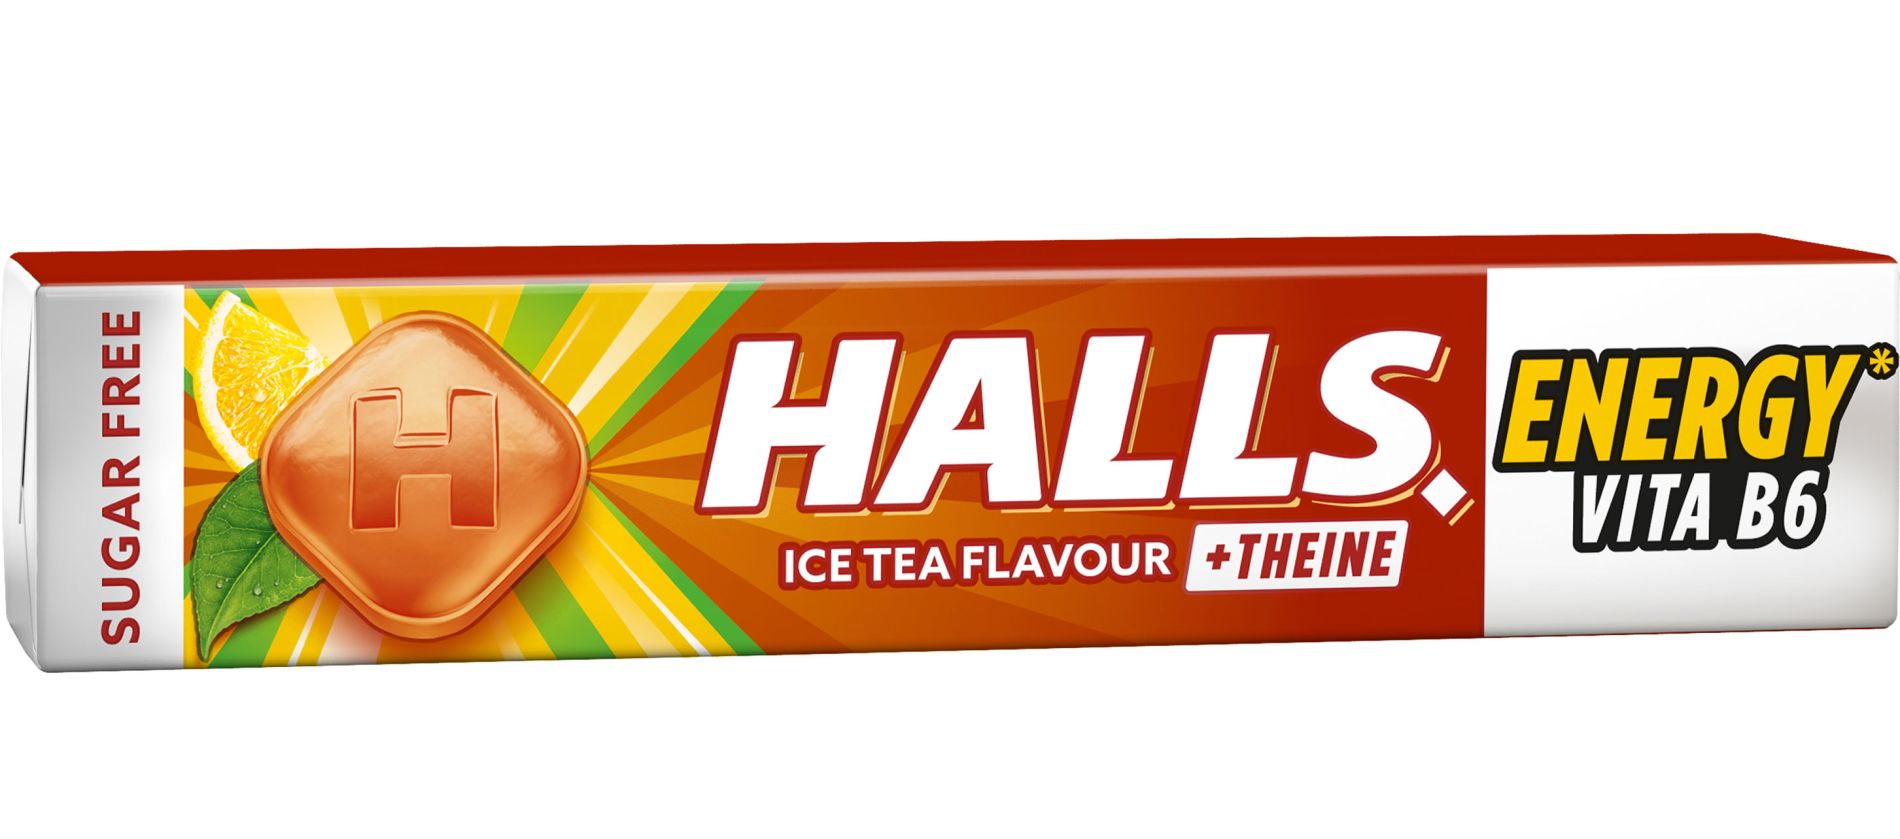 web-57031729-Halls-Ice-Tea-32g_300DPI